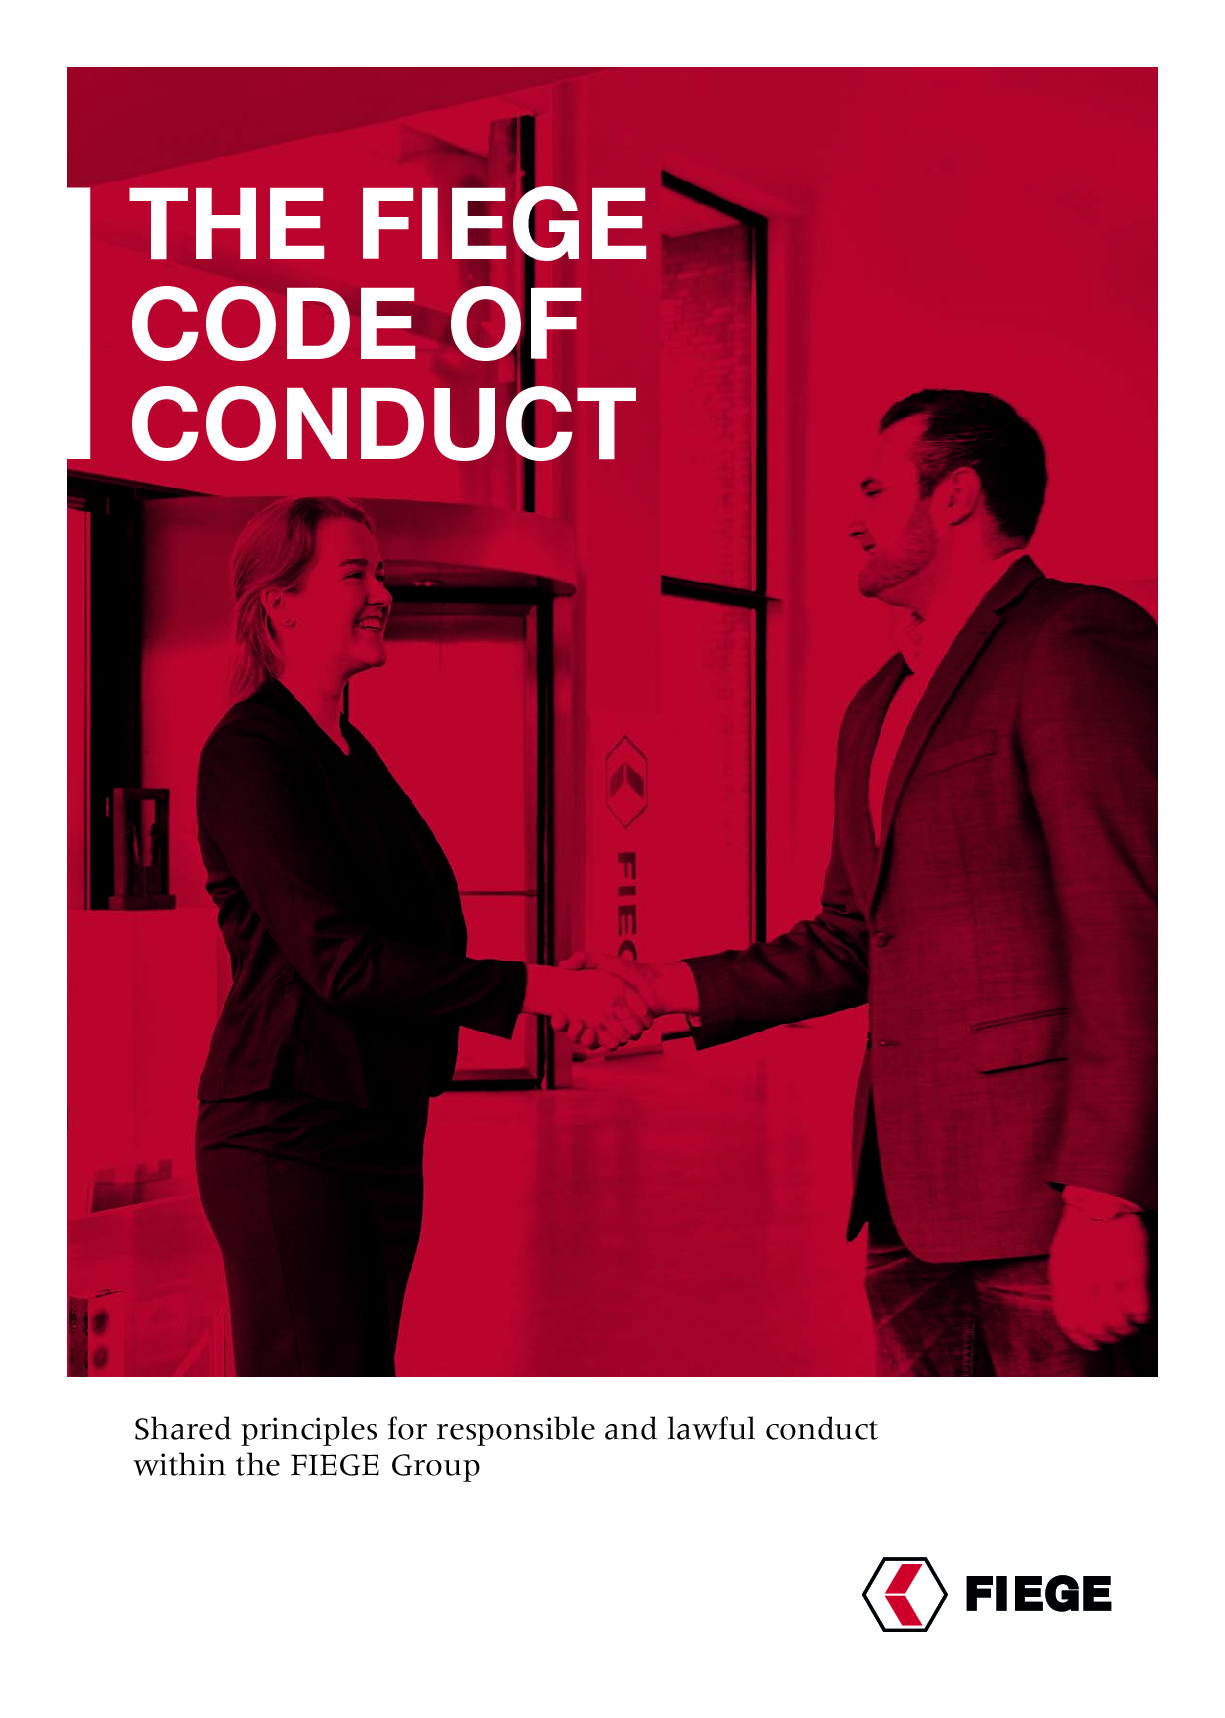 fiege-verhaltenskodex_code-of-conduct_en.pdf